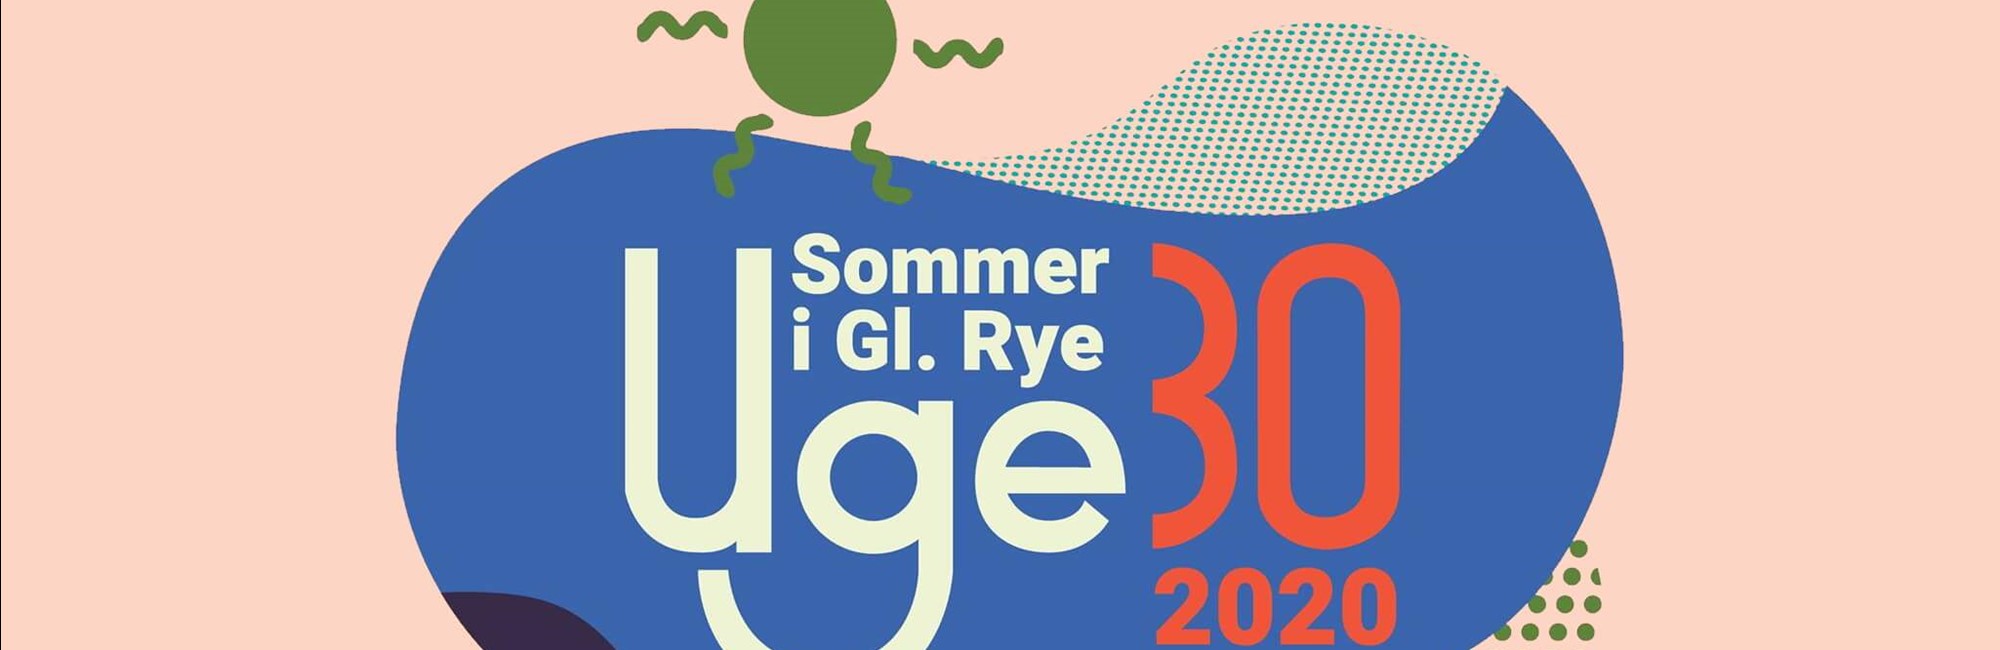 Uge 30 2020 - Sommer i Gl. Rye